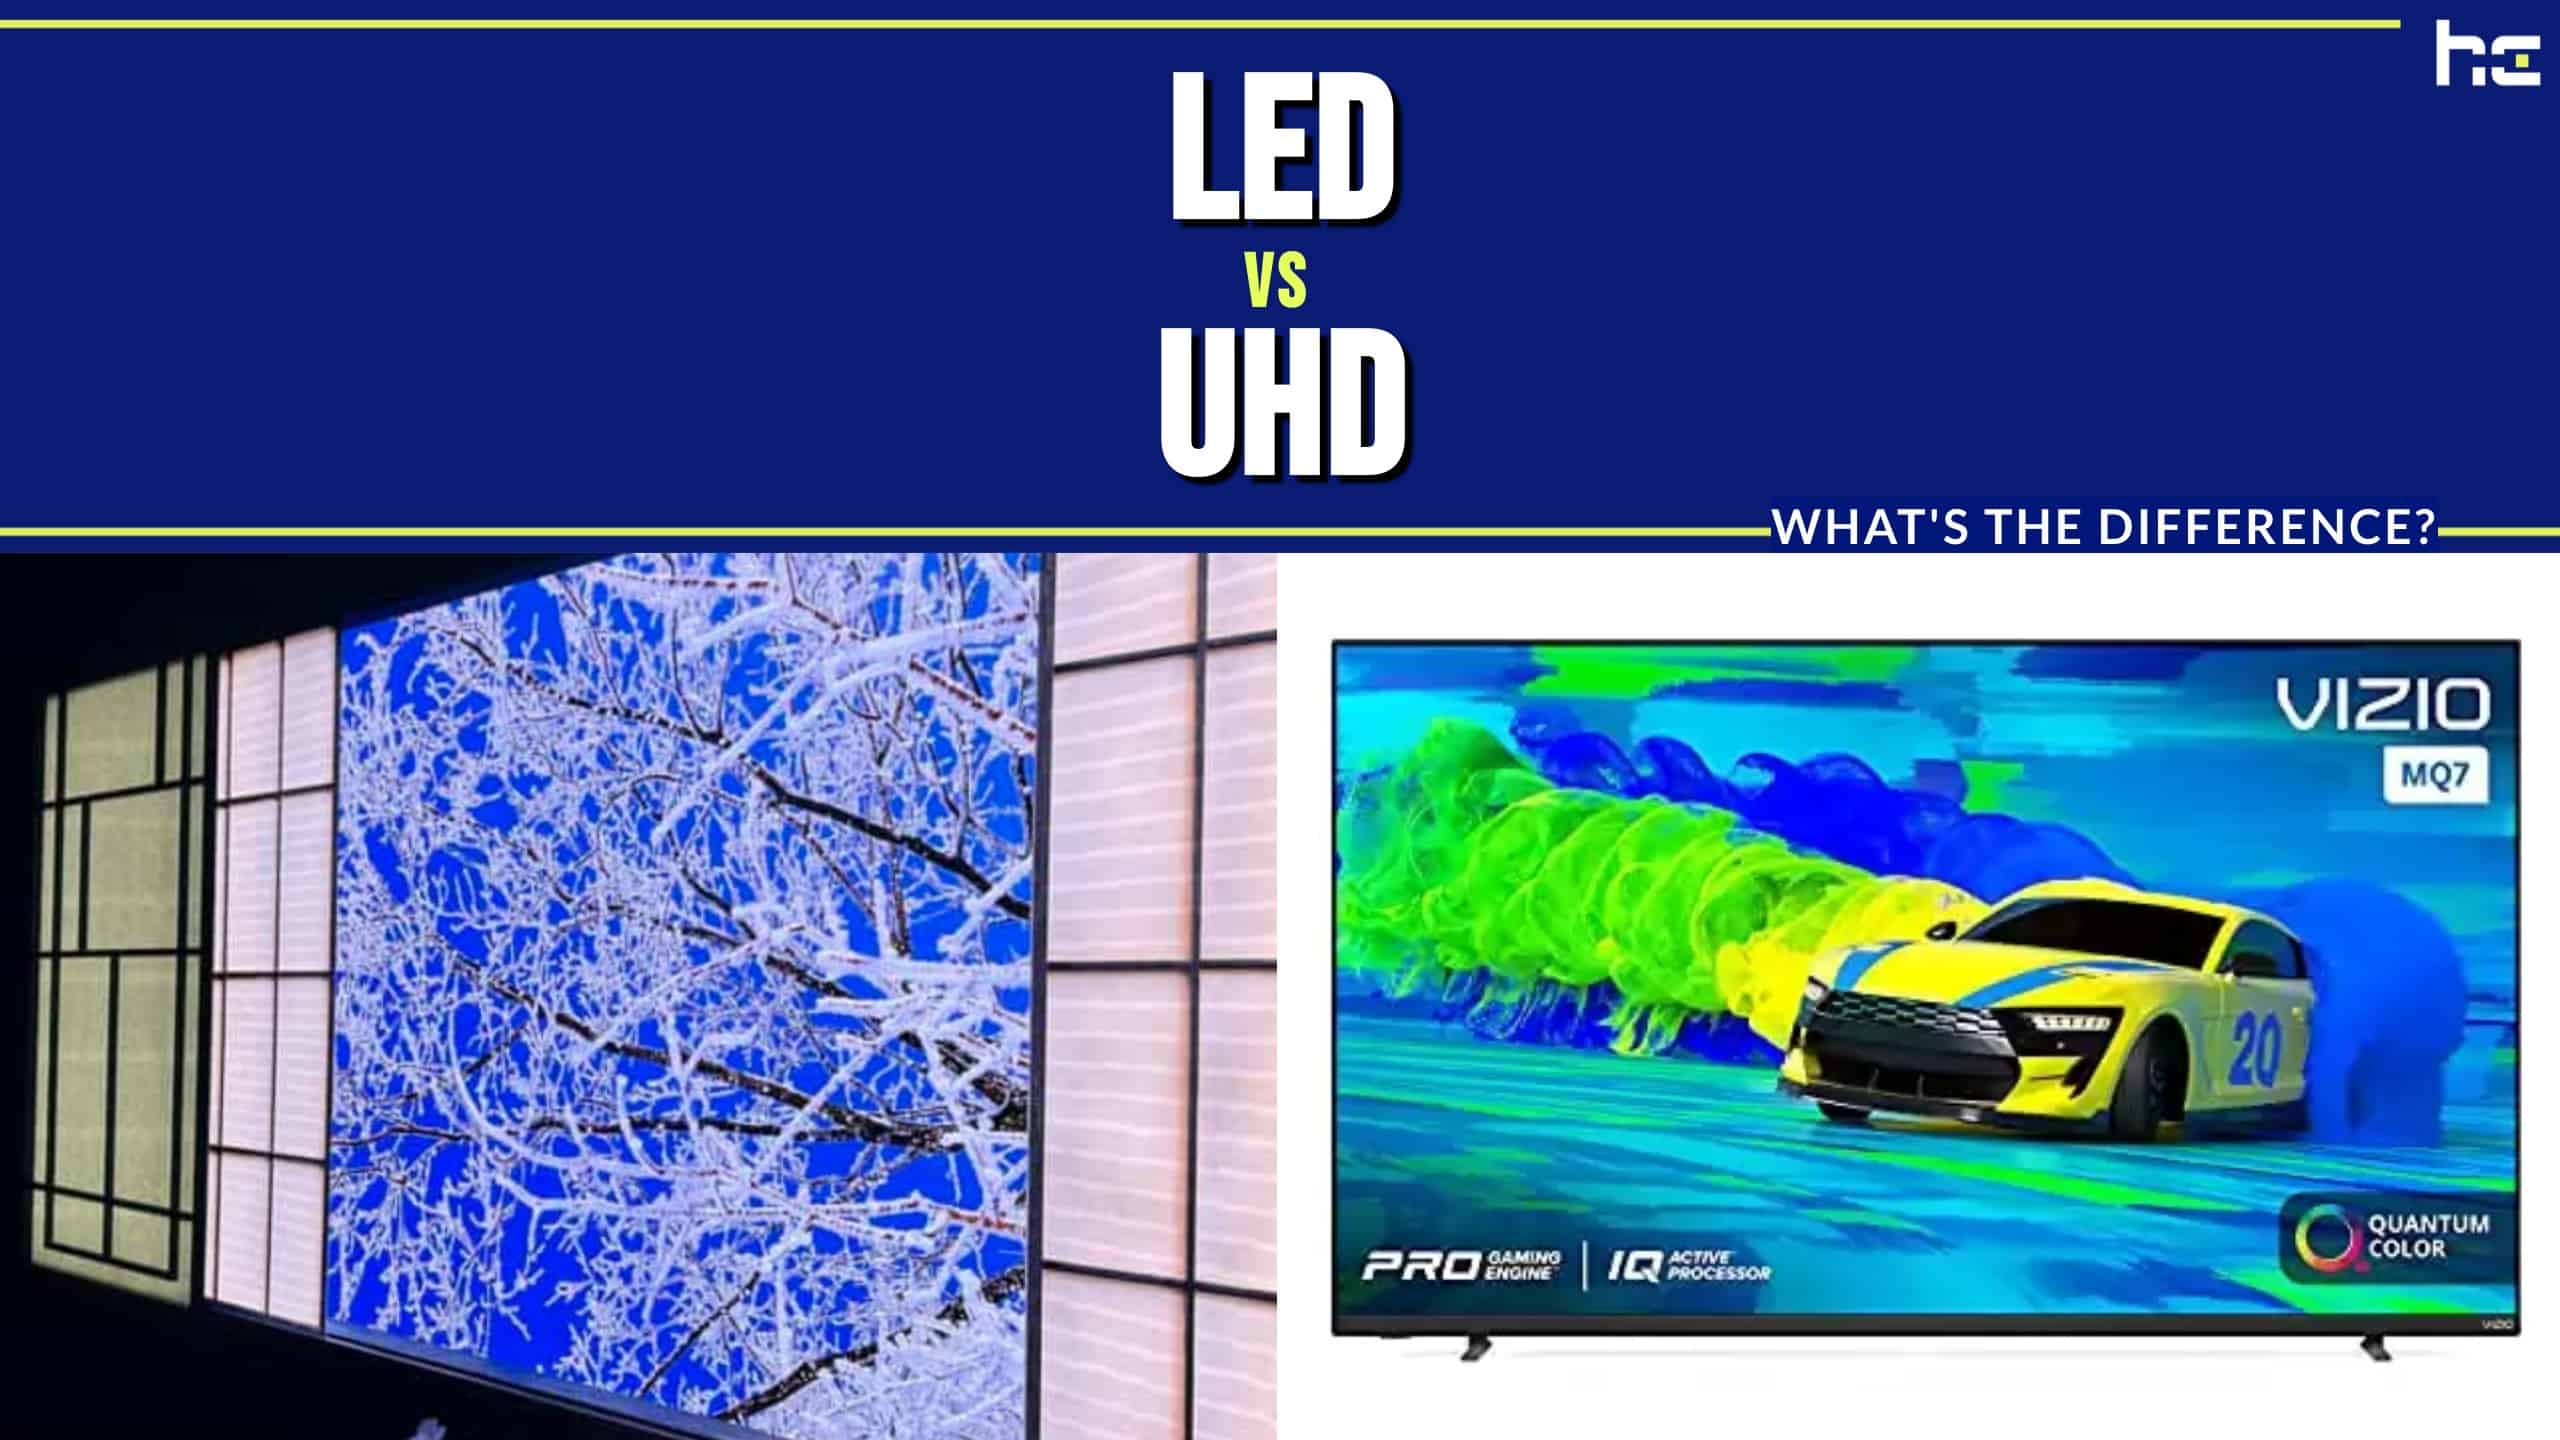 LED vs UHD